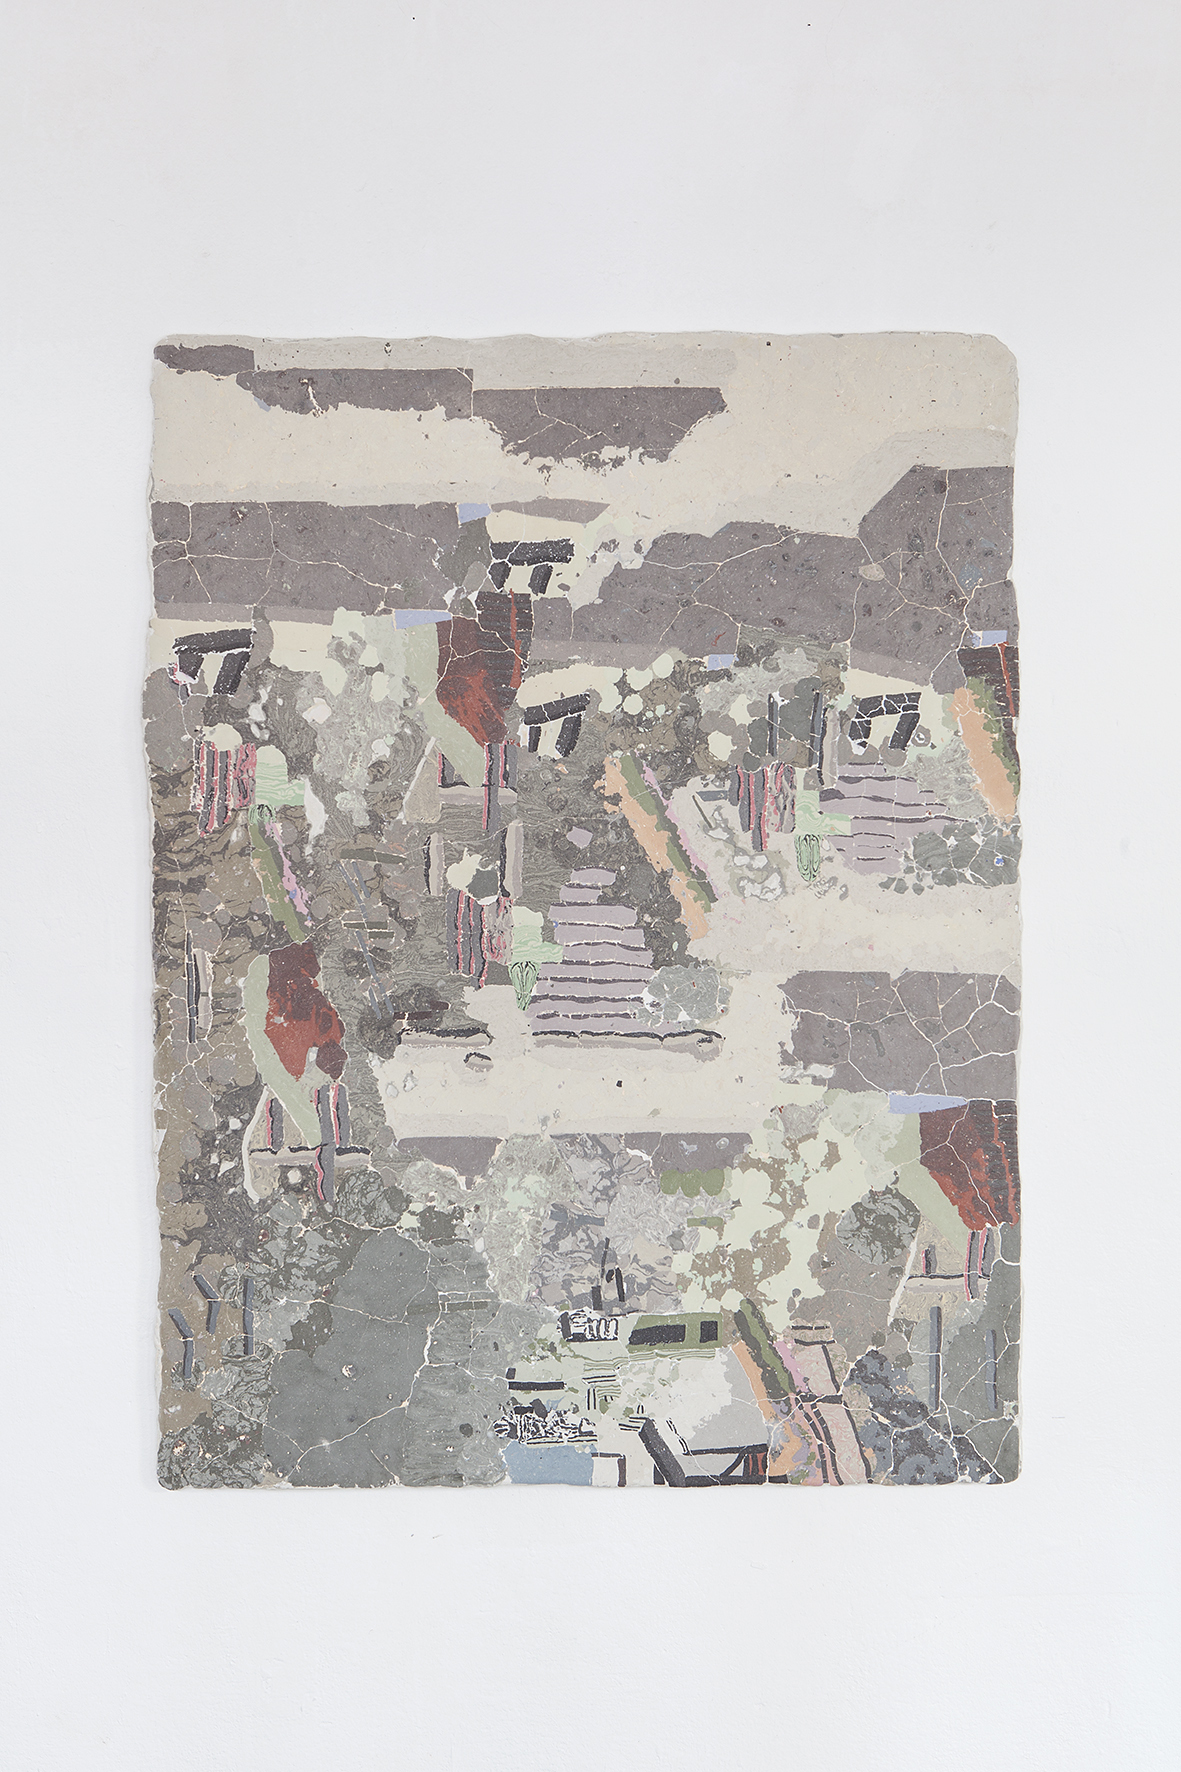 Heti Prack, Altes Licht, 2021, 113 x 85 cm, Gypsum, pigments, bone glue